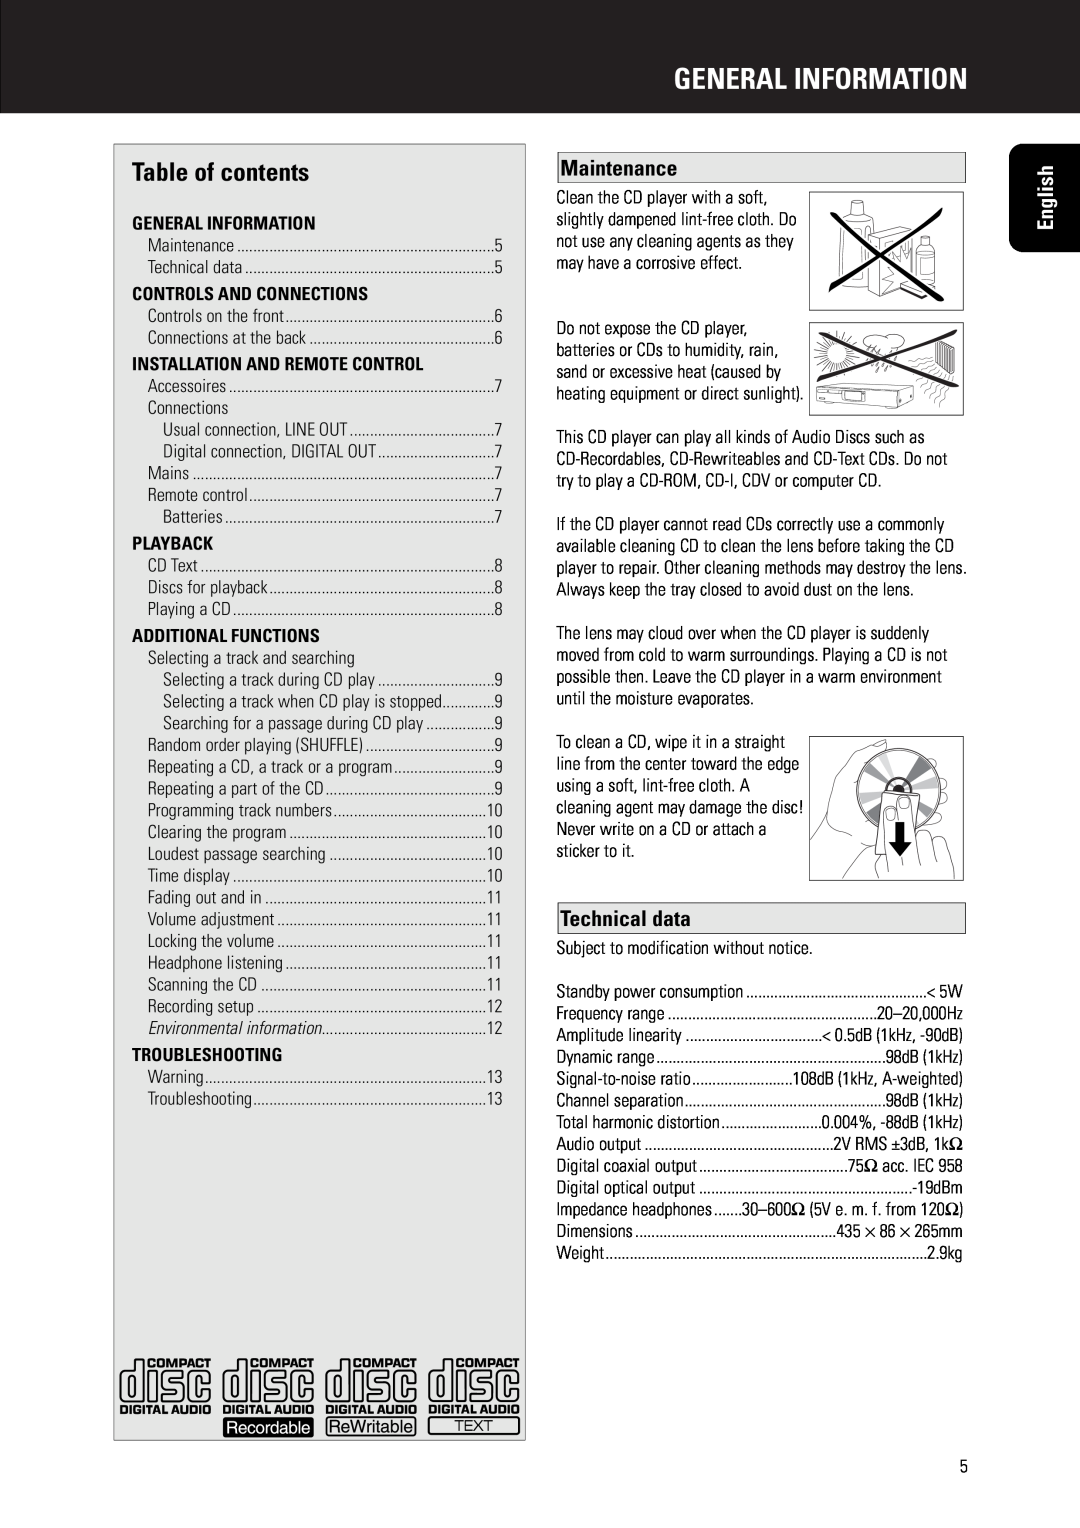 Marantz CD5000 manual General Information, Table of contents, Maintenance, Technical data, English 